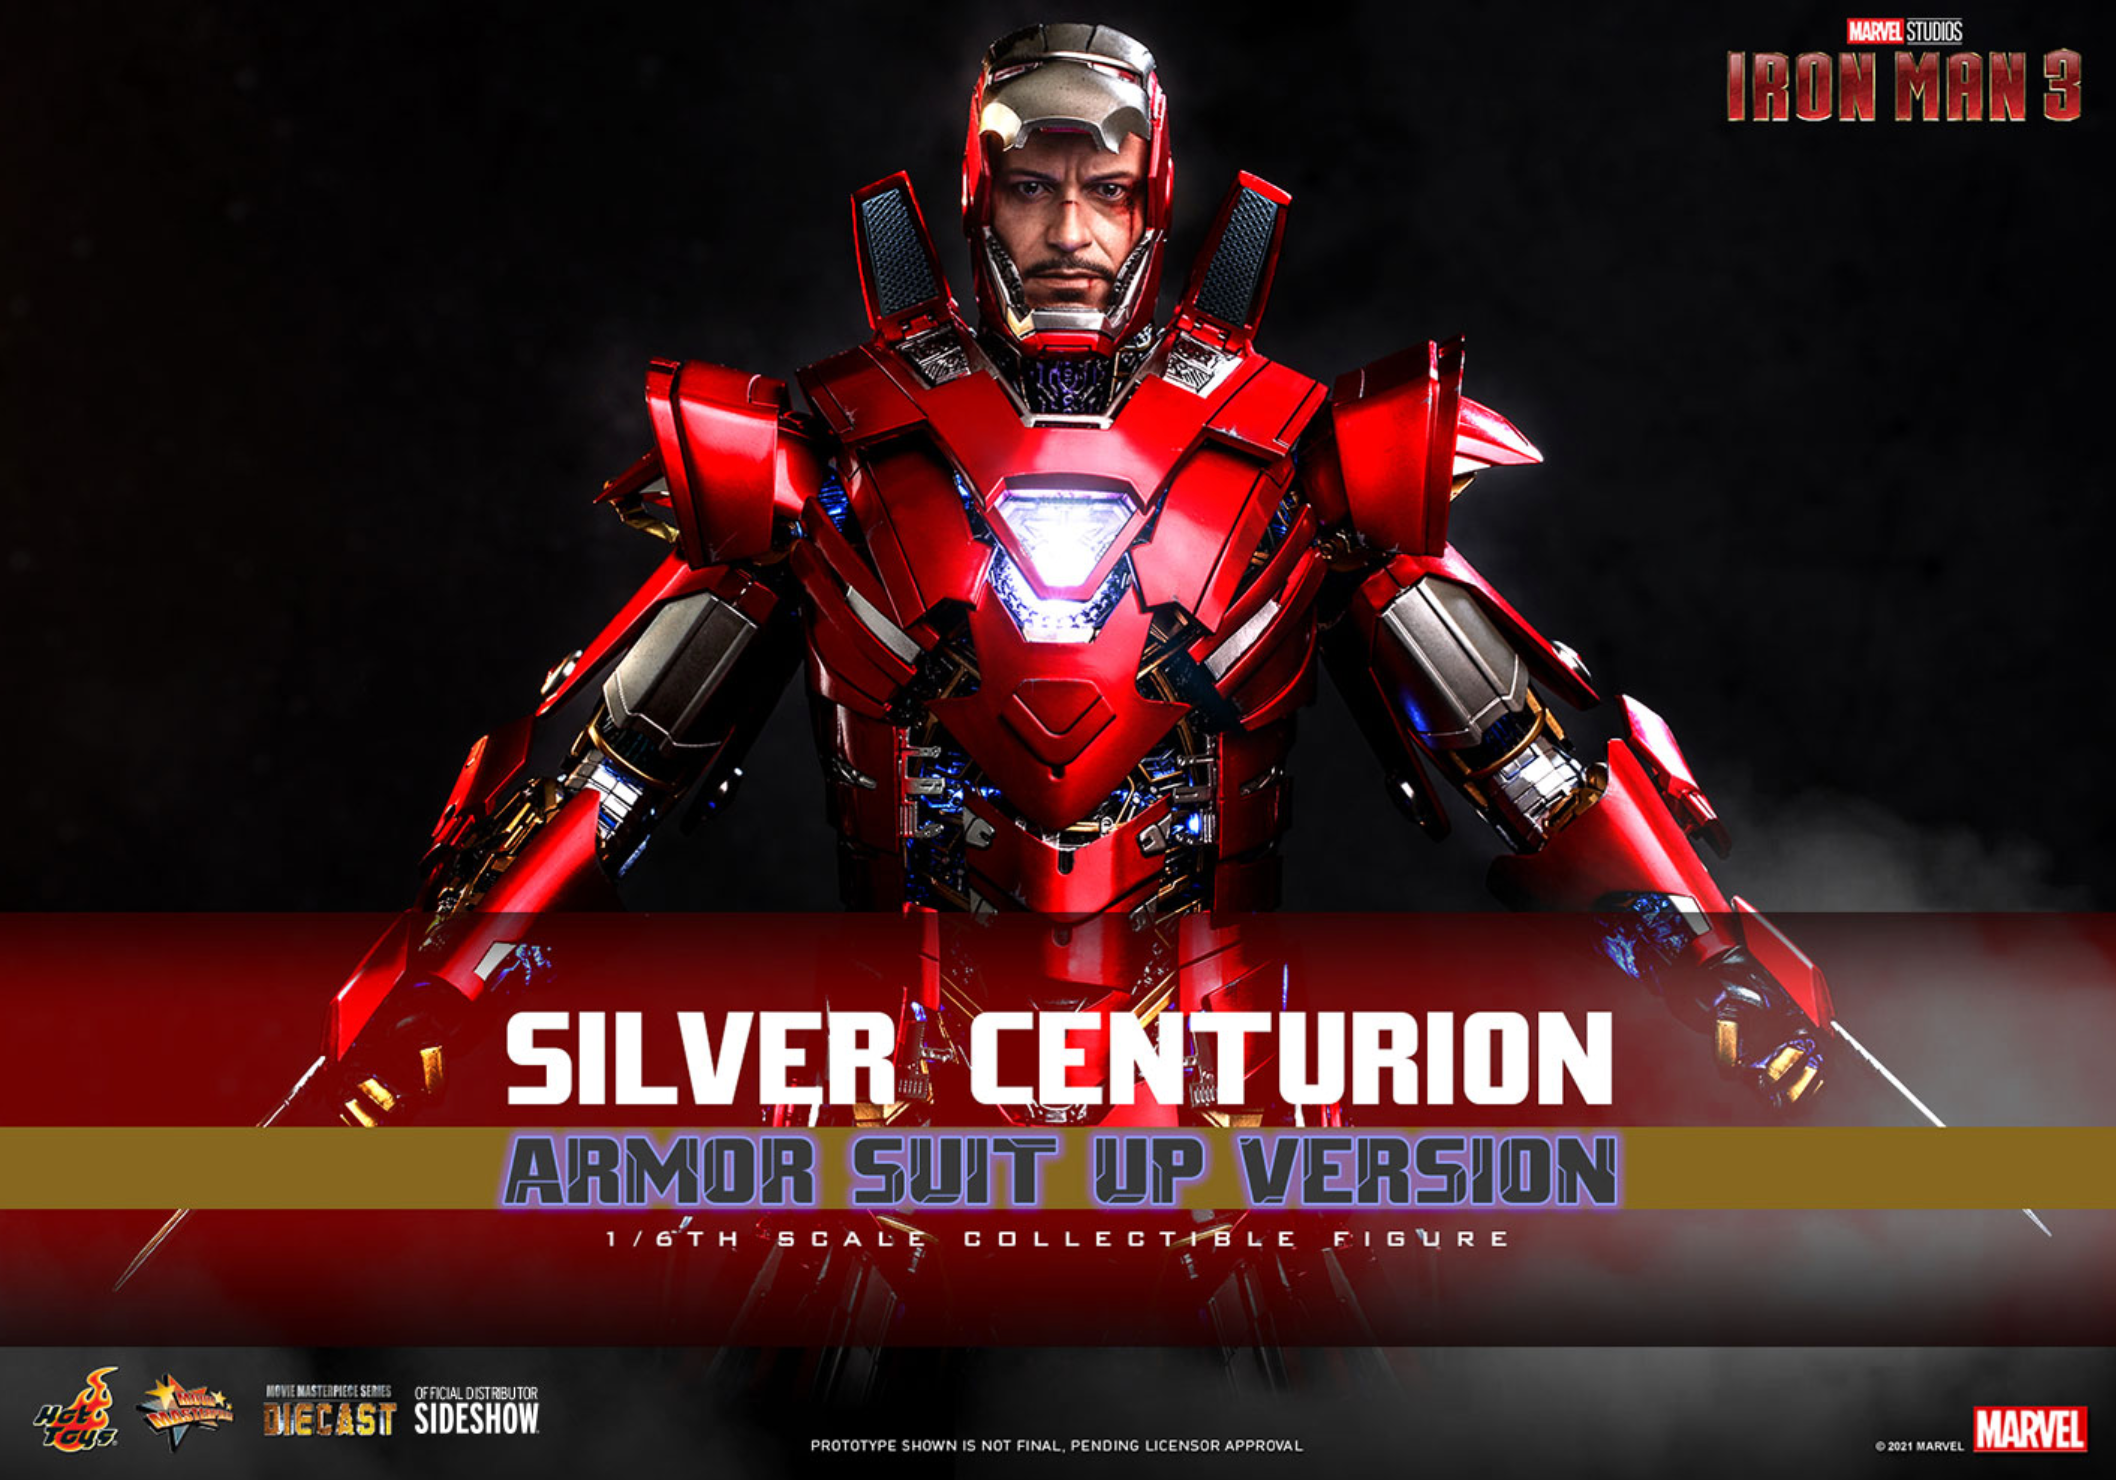 Hot Toys Iron Man 3 Silver Centurion (Armor Suit Up Version)